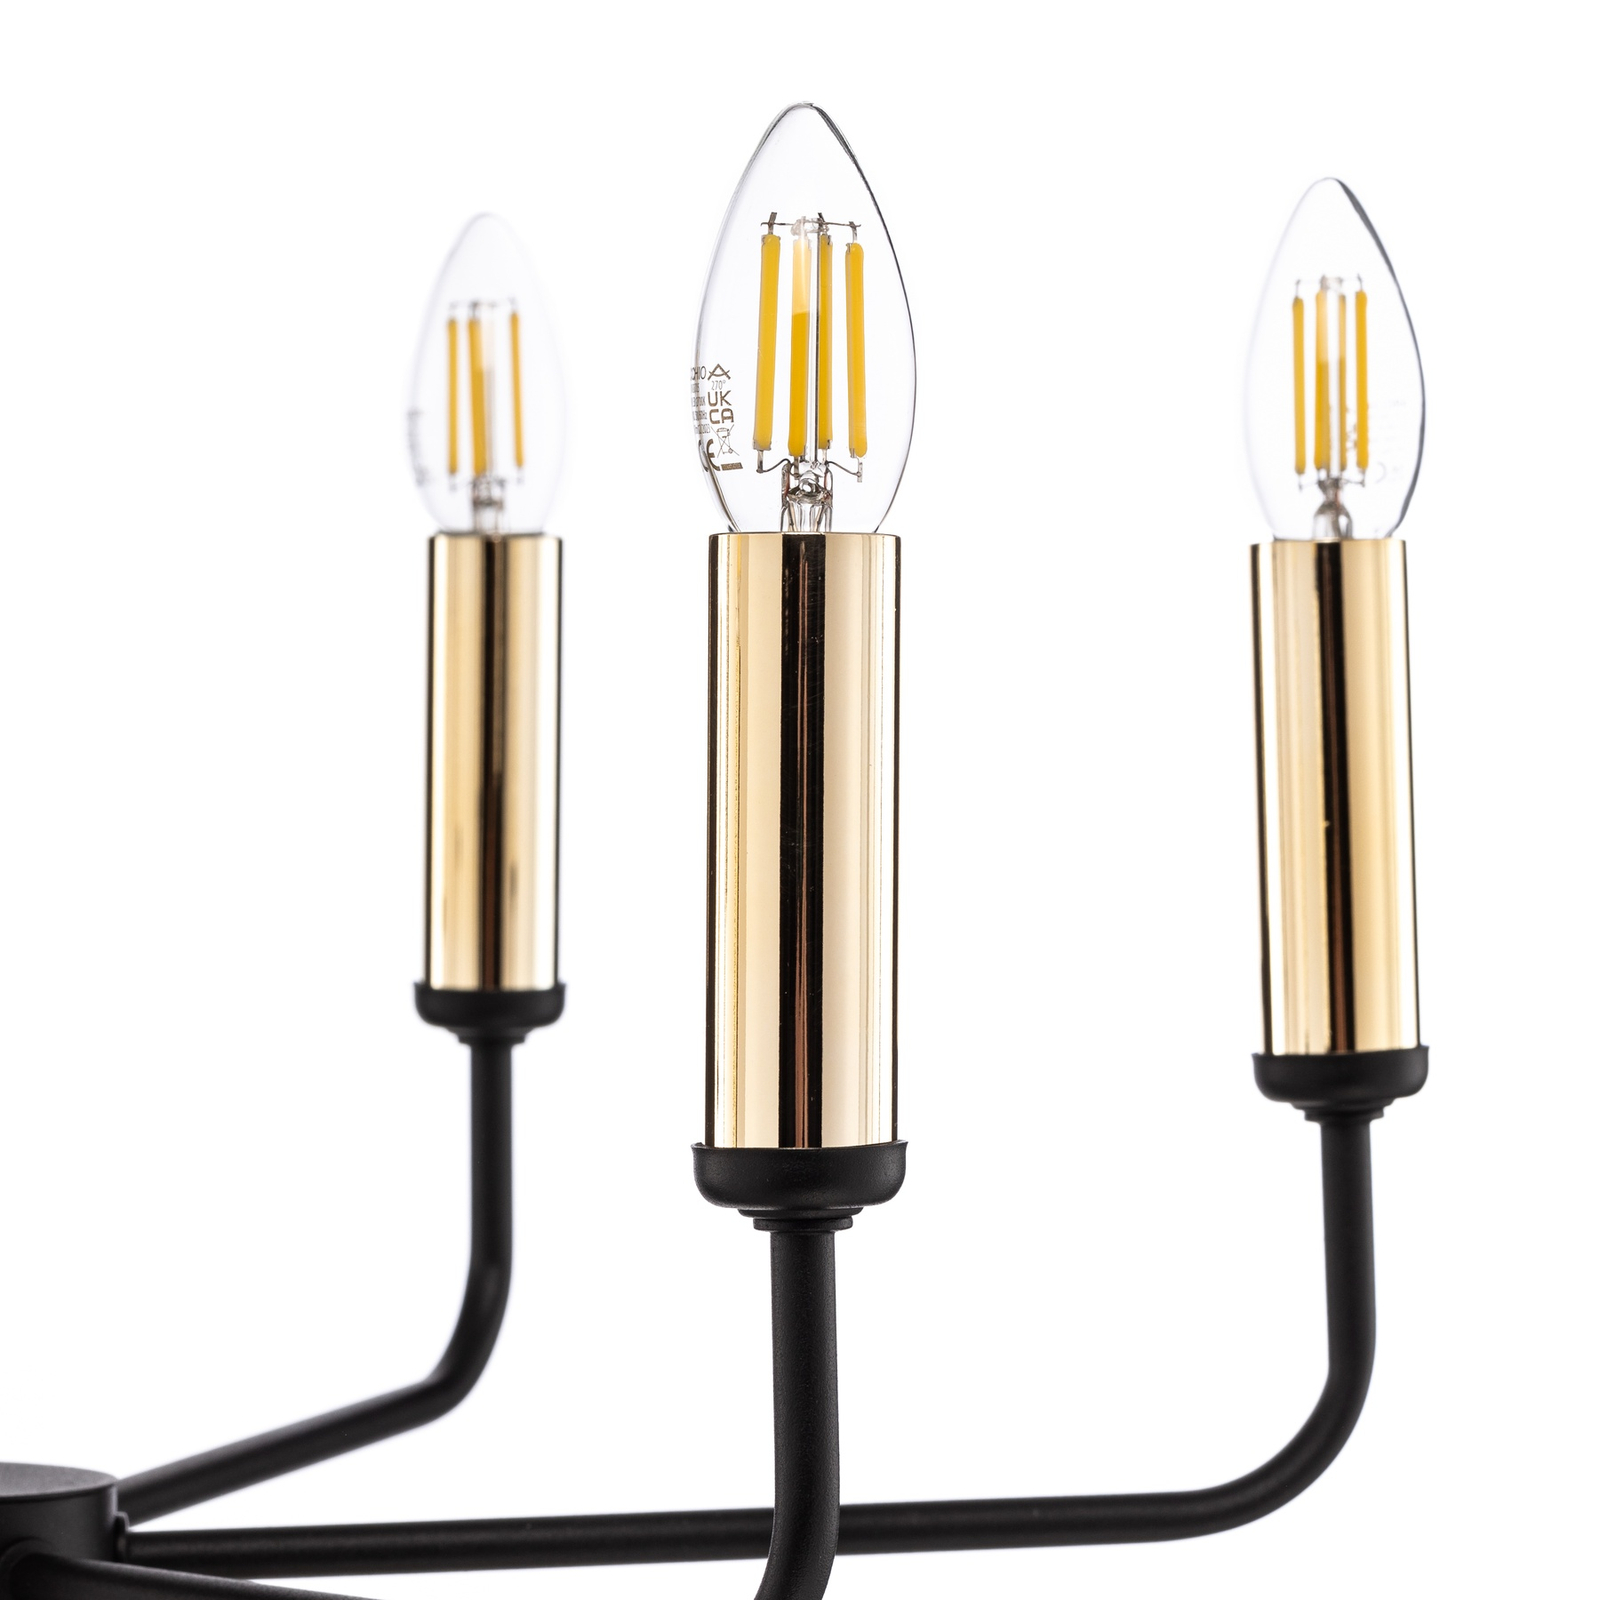 Ampli chandelier, black/gold, six-bulb